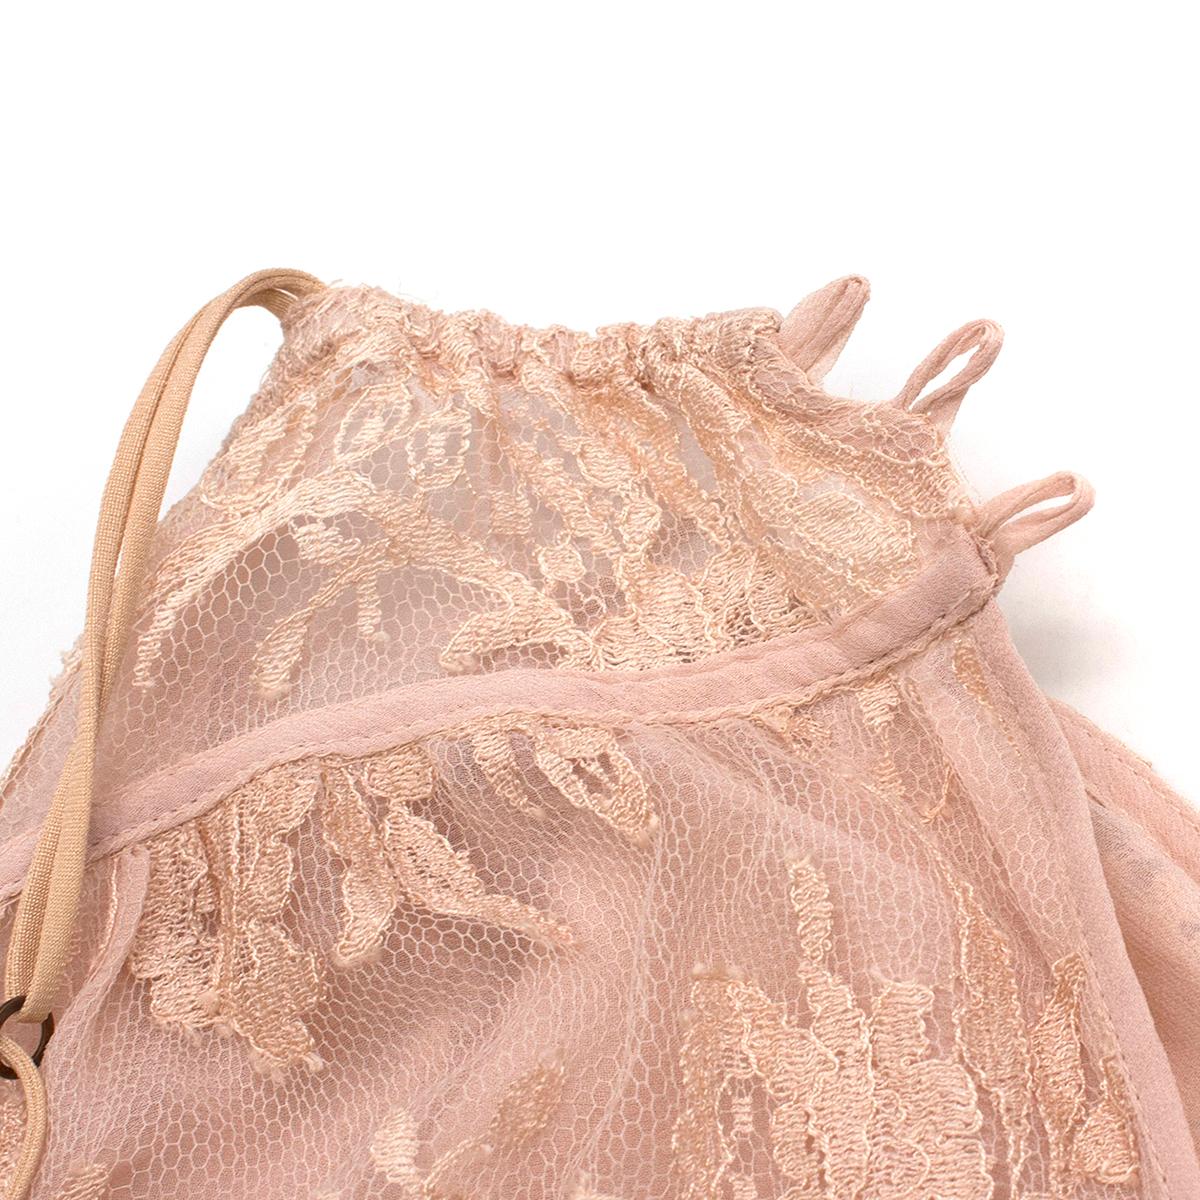 White Rosamosario Nude Pink Lace Slip Dress - Size US 6